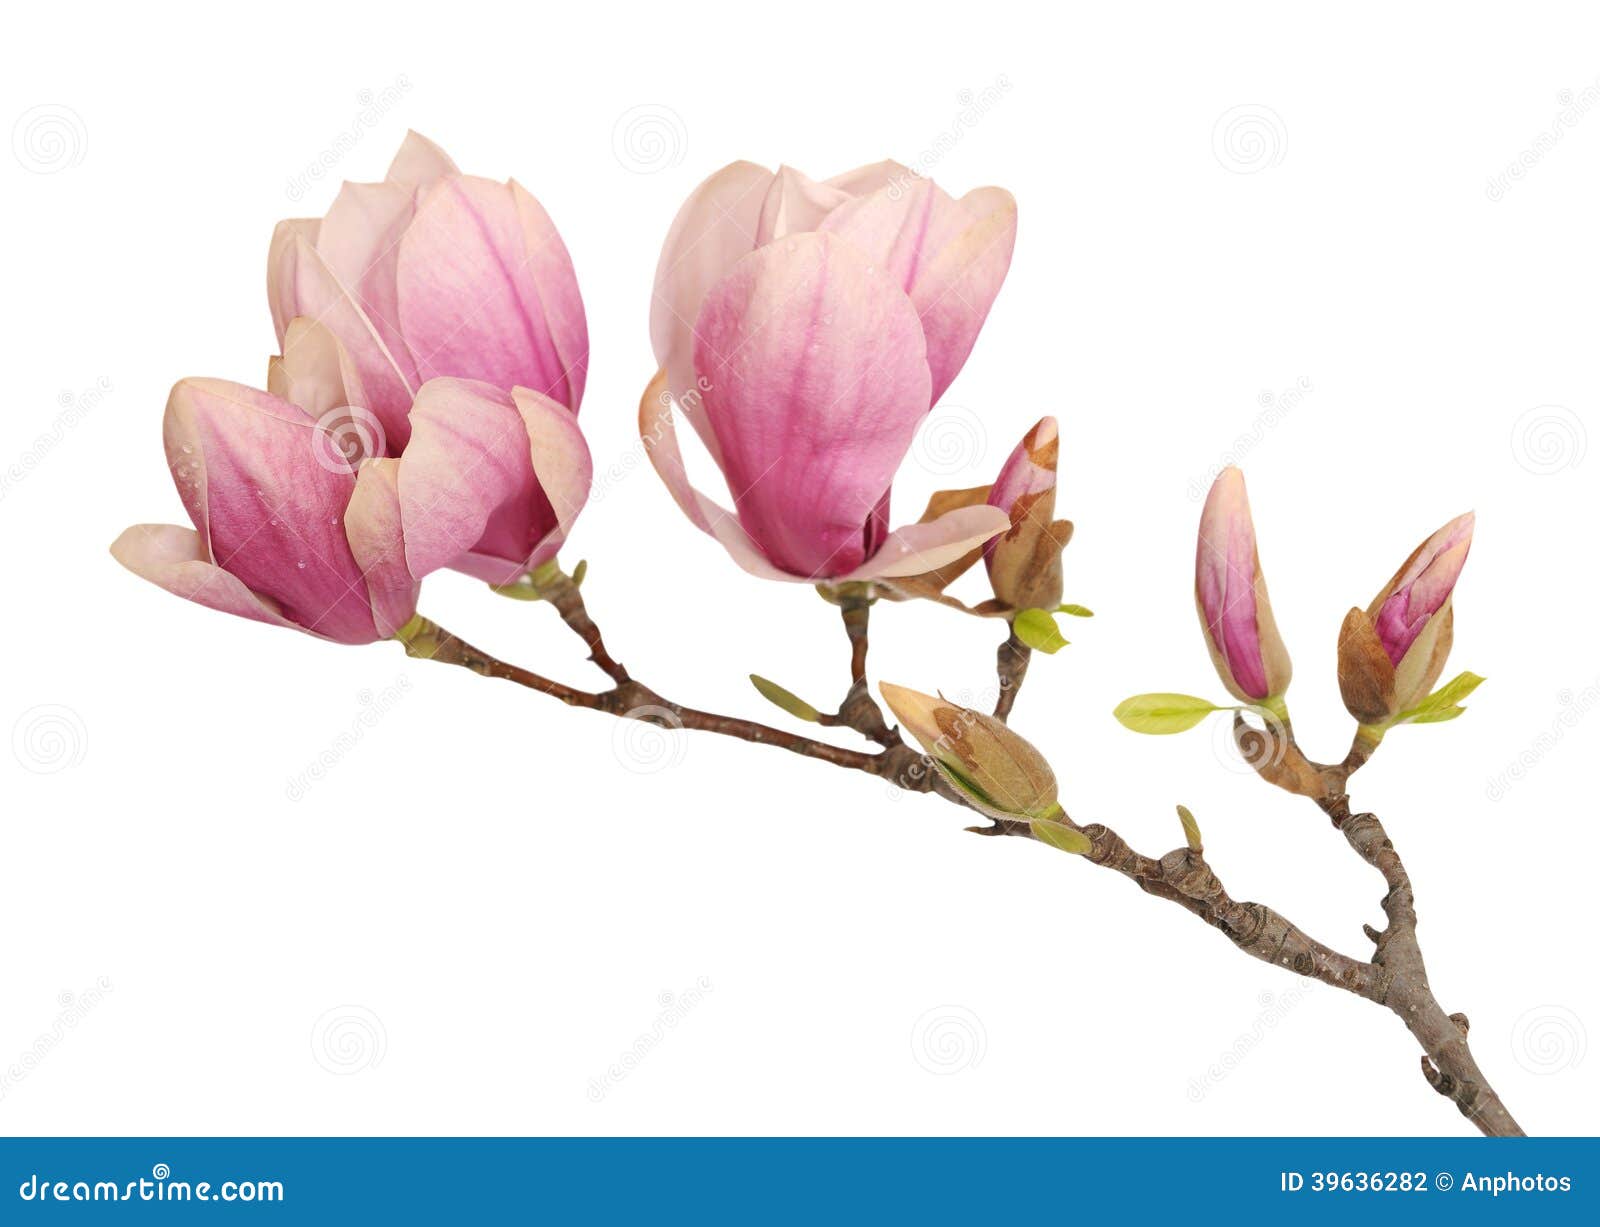 Magnolia Flower Stock Photo Image Of Flower Flora Blossom 39636282